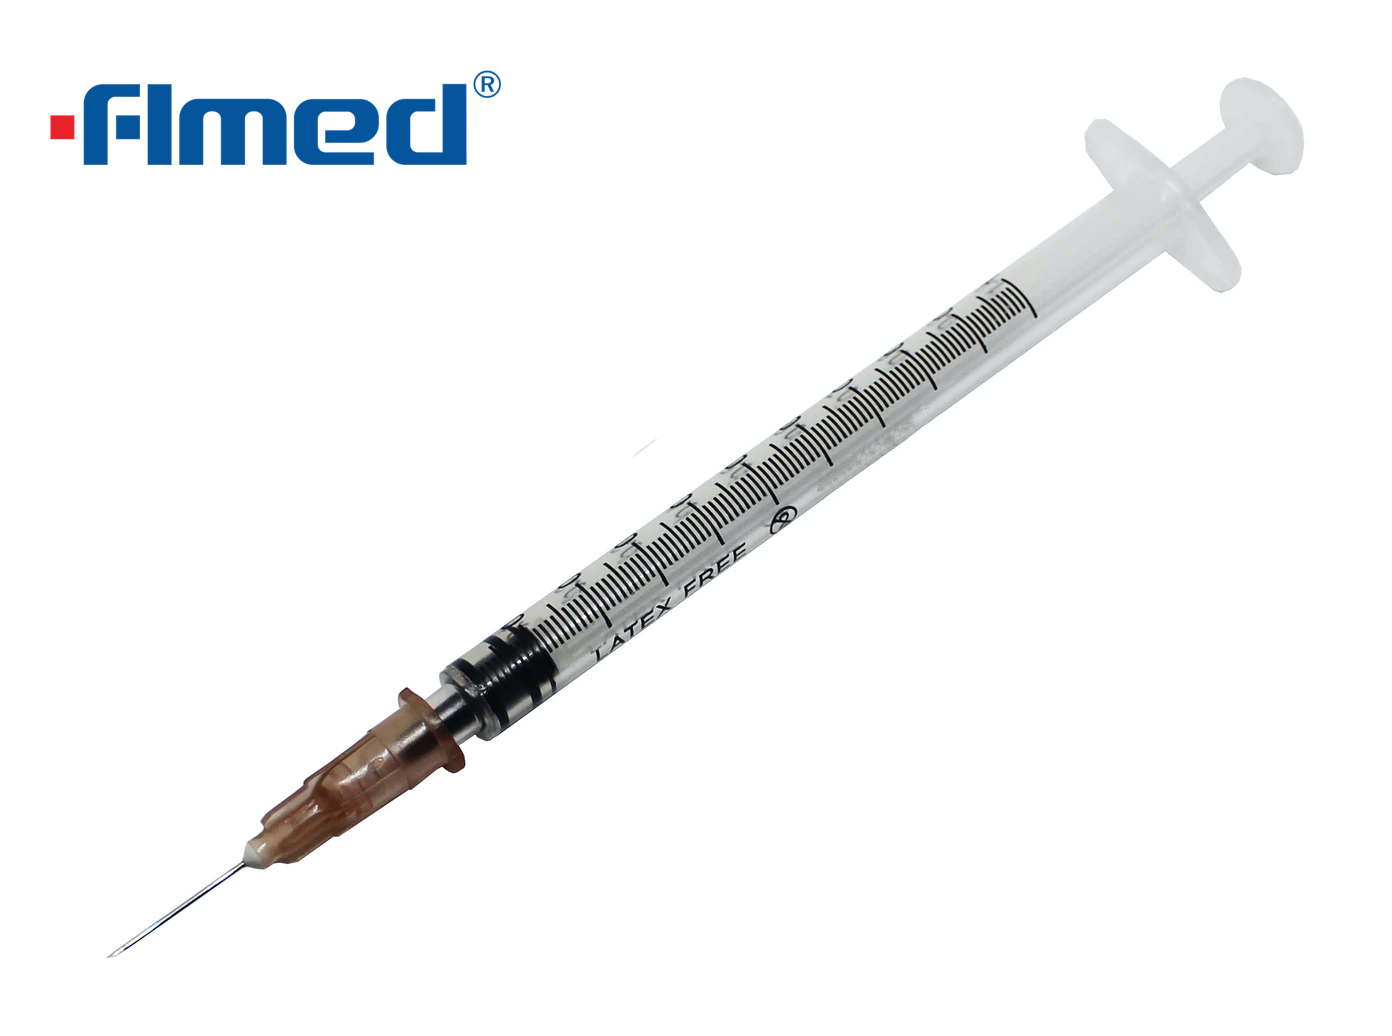 25g, 5/8 Tuberculin Needle - 1cc/1ml Syringe